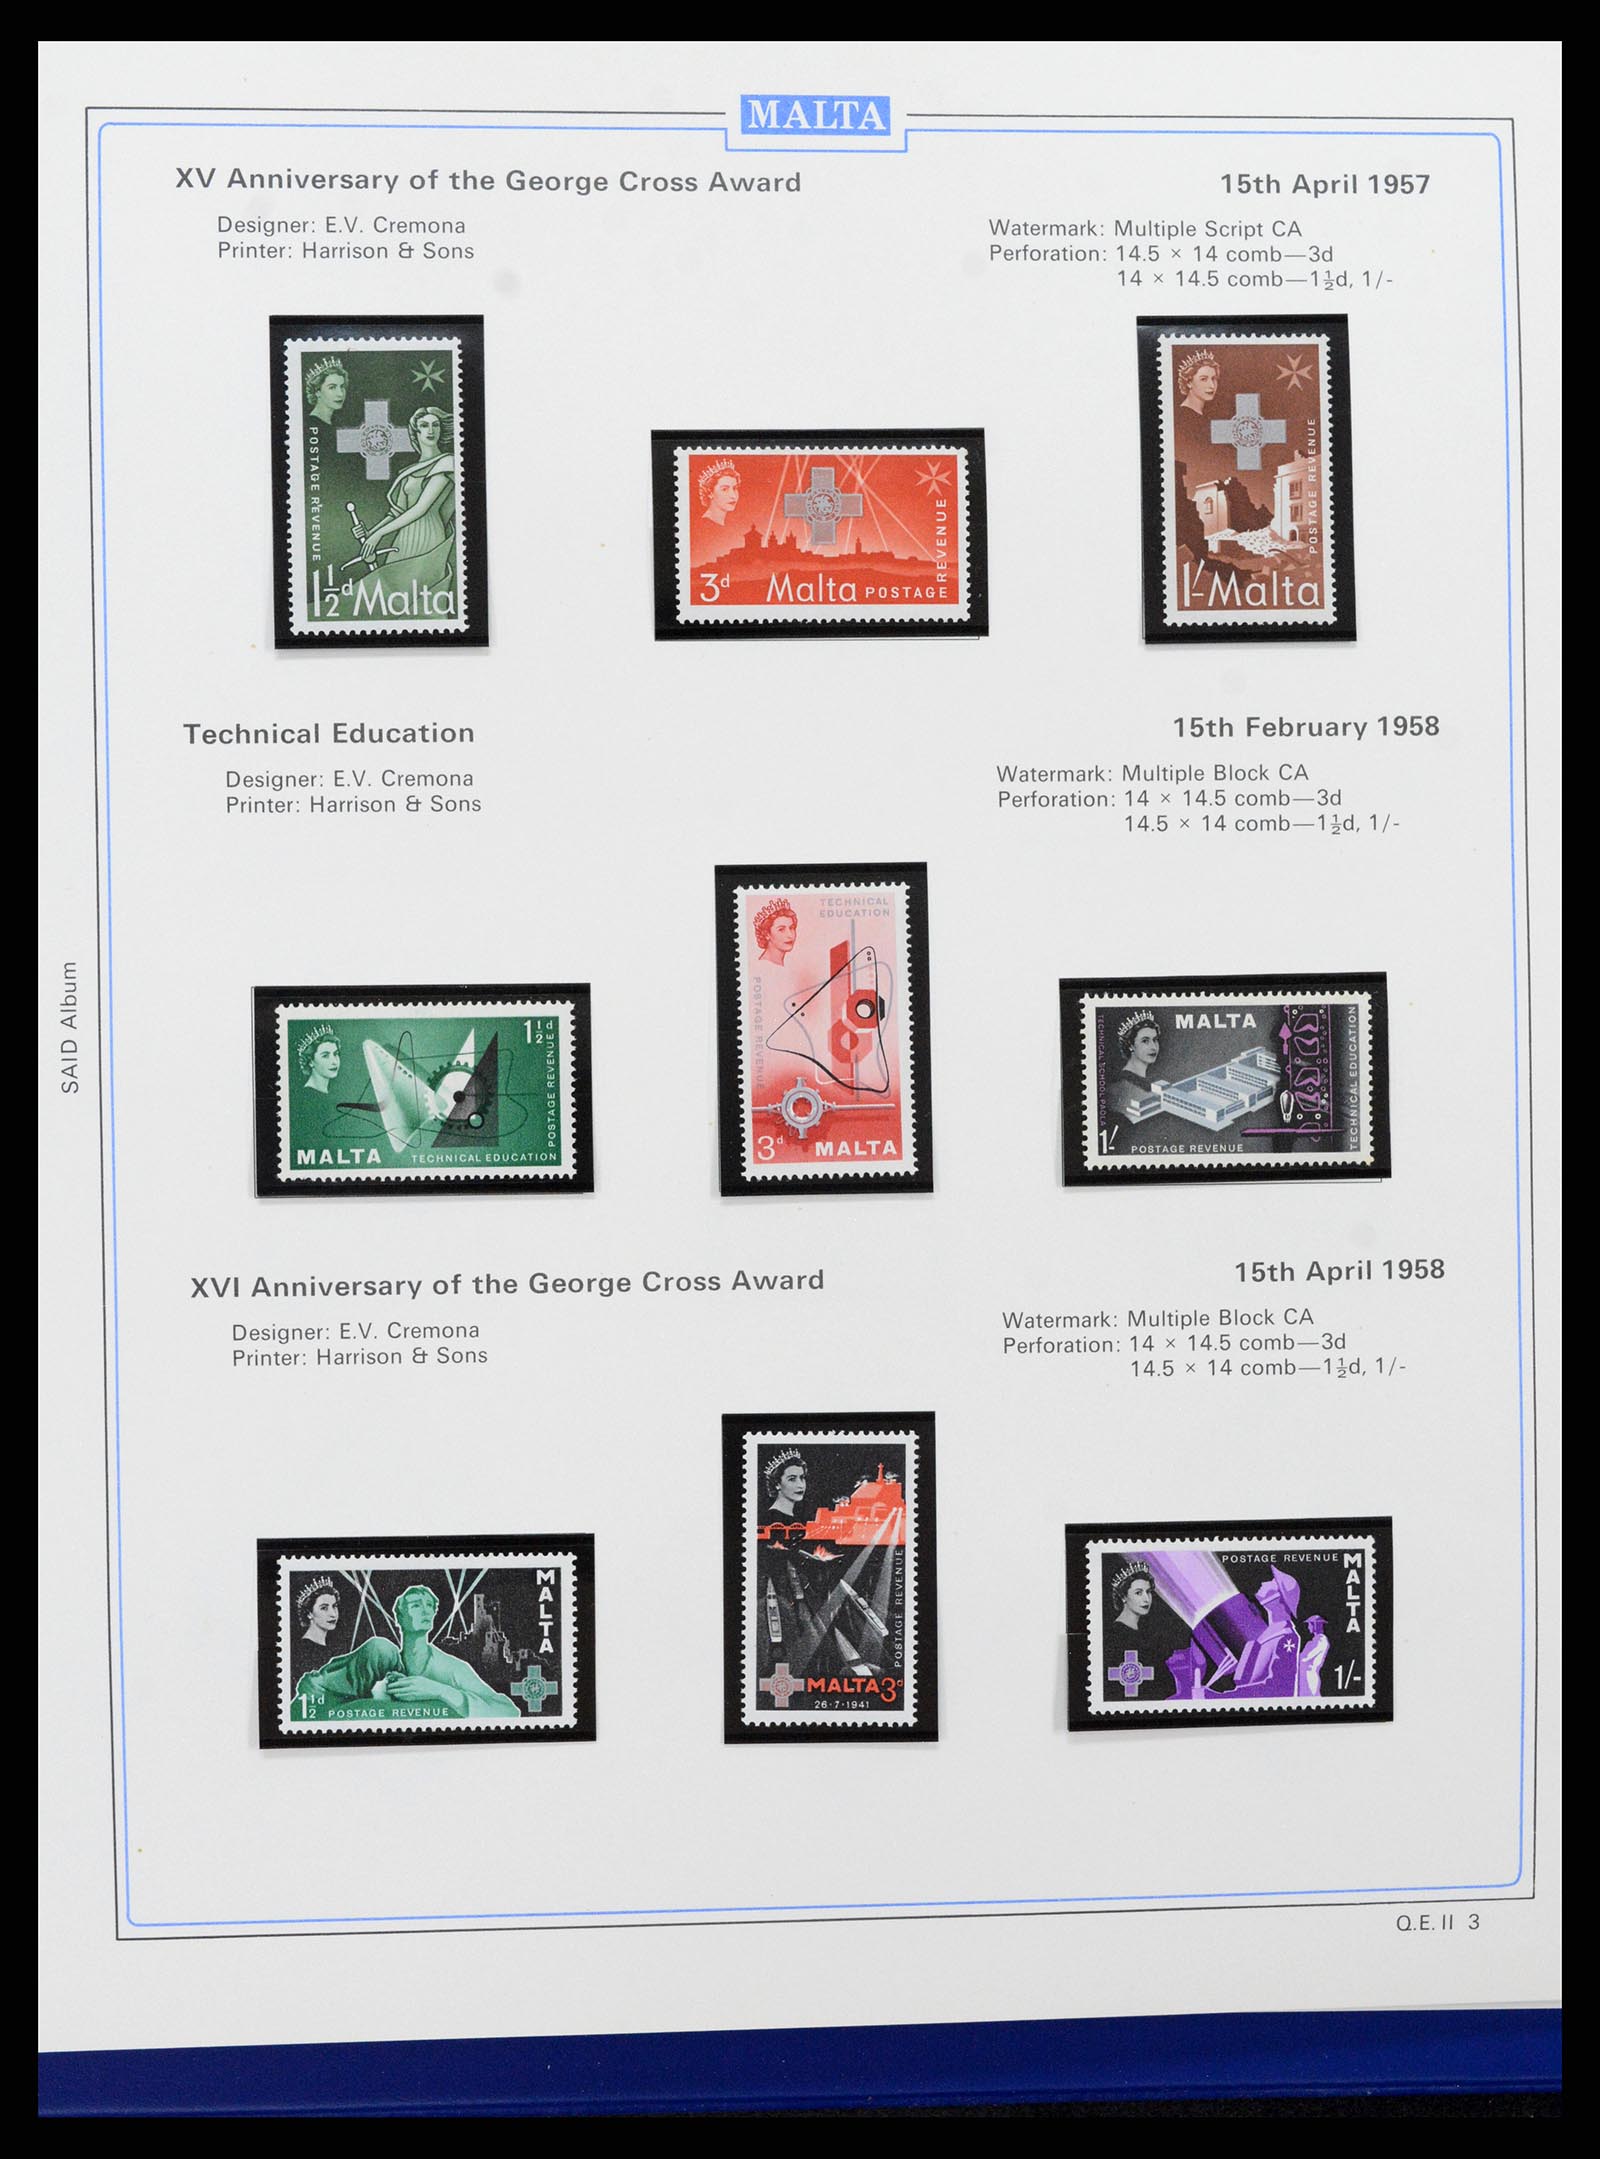 37374 023 - Stamp collection 37374 Malta 1885-2012.